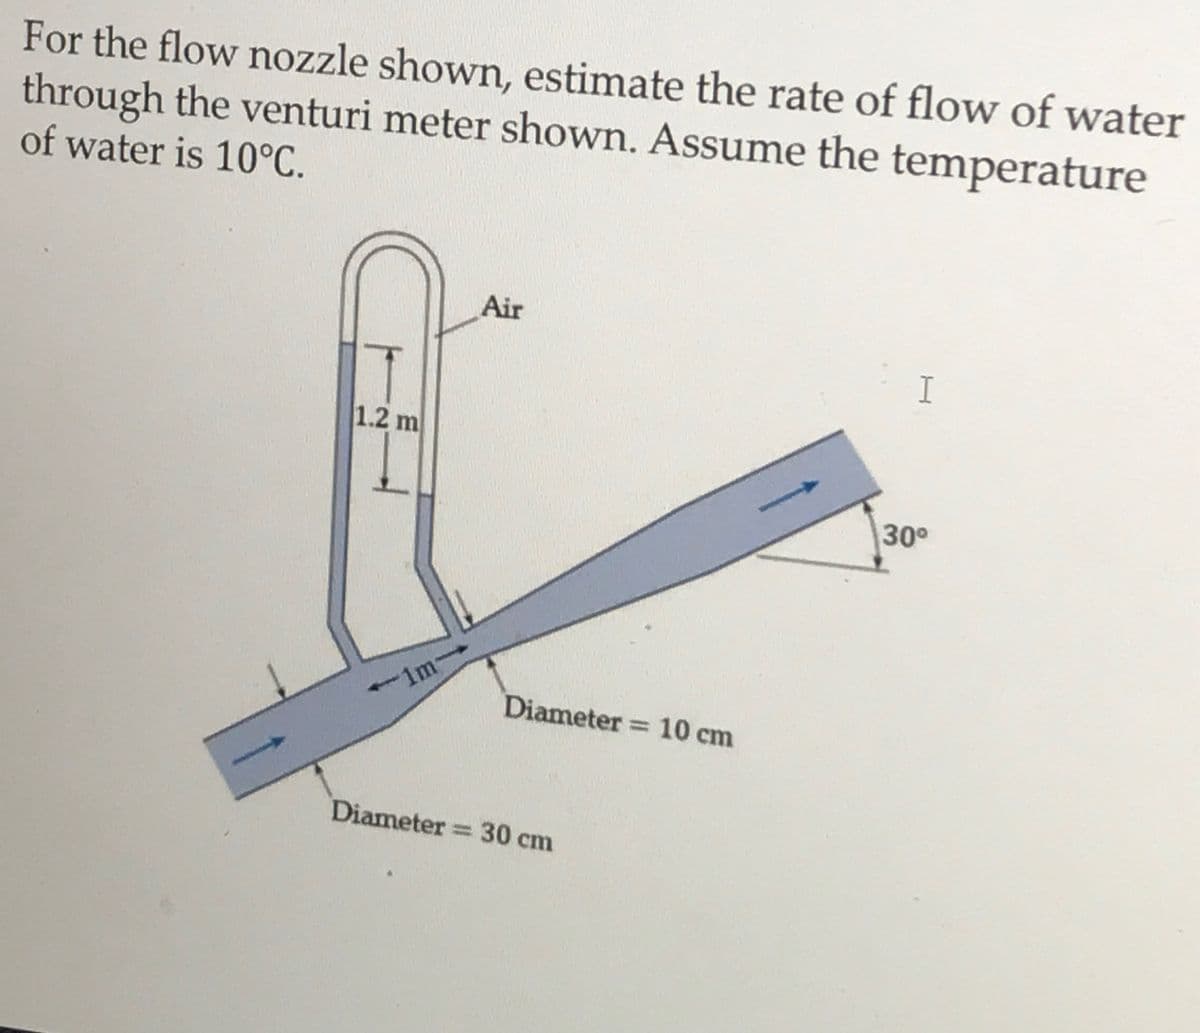 For the flow nozzle shown, estimate the rate of flow of water
through the venturi meter shown. Assume the temperature
of water is 10°C.
1.2 m
-1m-
Air
Diameter = 10 cm
Diameter = 30 cm
I
30°